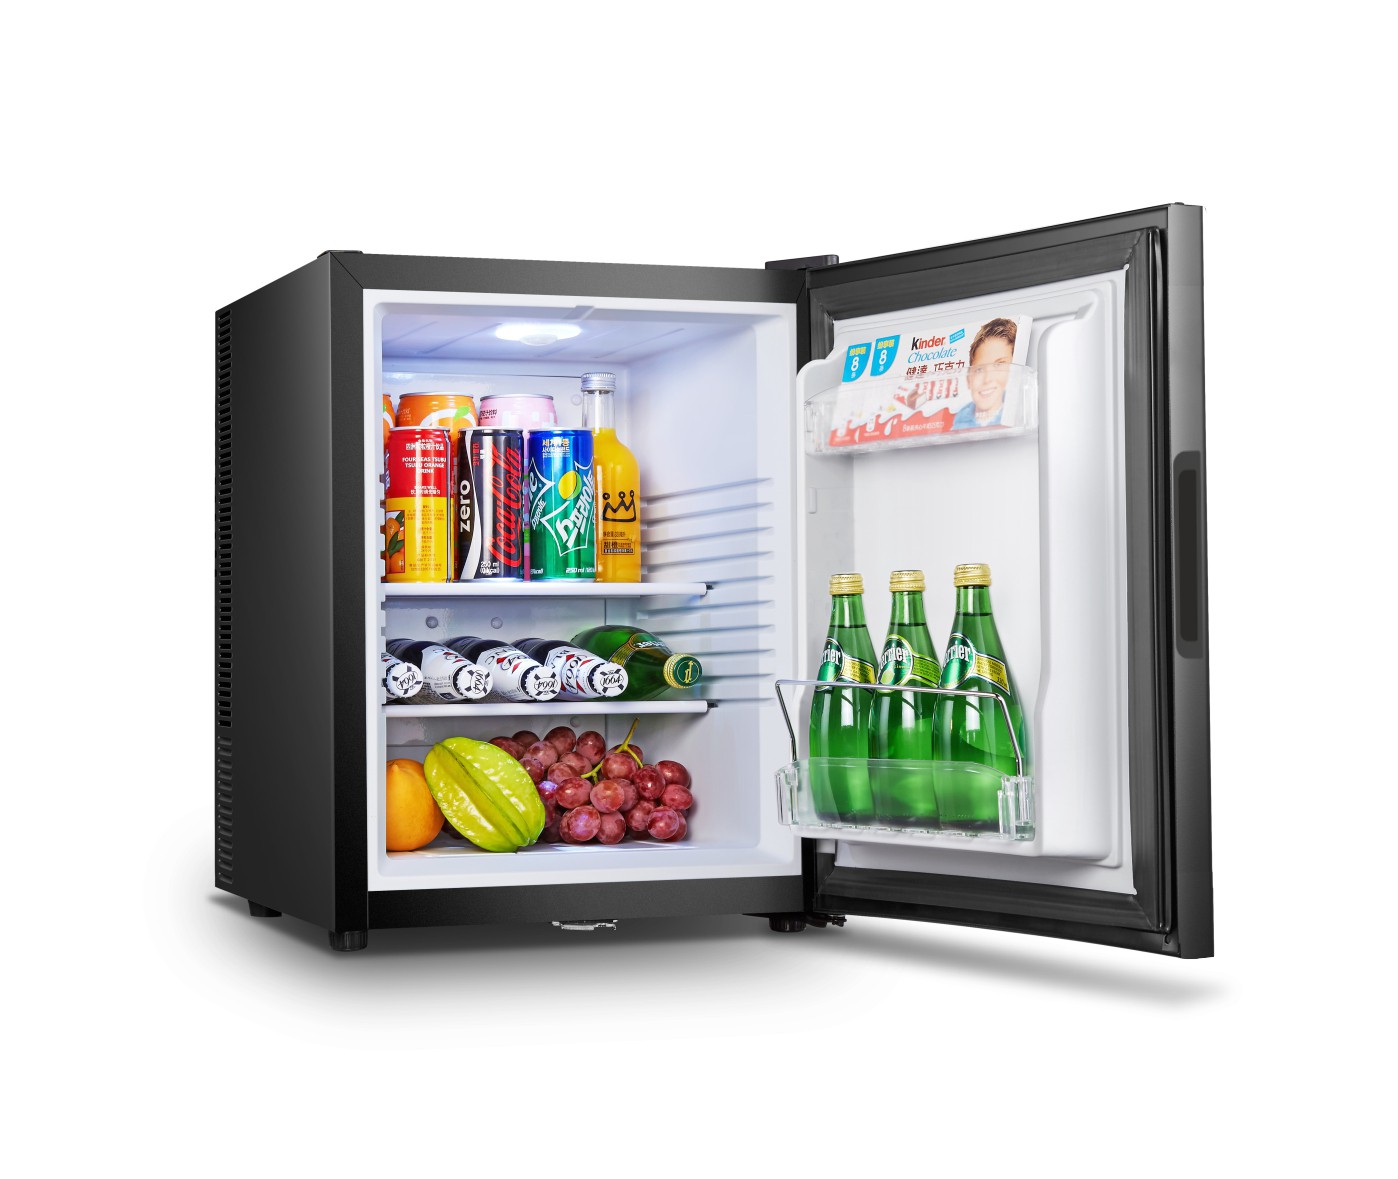 Мини холодильник с камерой. Мини холодильник Mini Fridge. Neoclima NF-50l мини холодильник. Мини холодильник 18l Mini Fridge (model:KT-x18). Мини-холодильник HT-17a +.